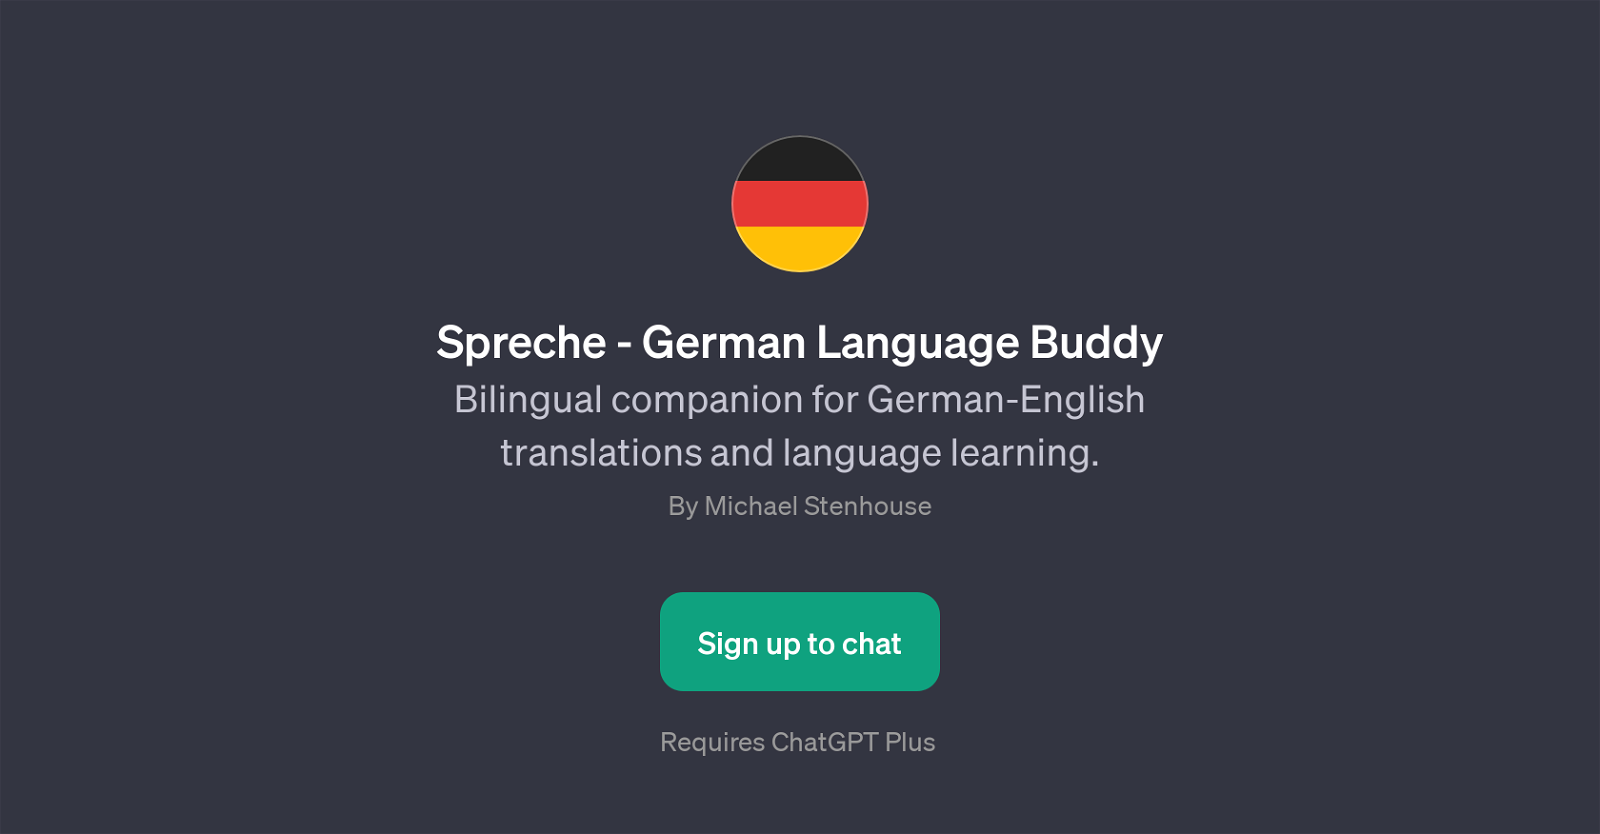 Spreche - German Language Buddy website